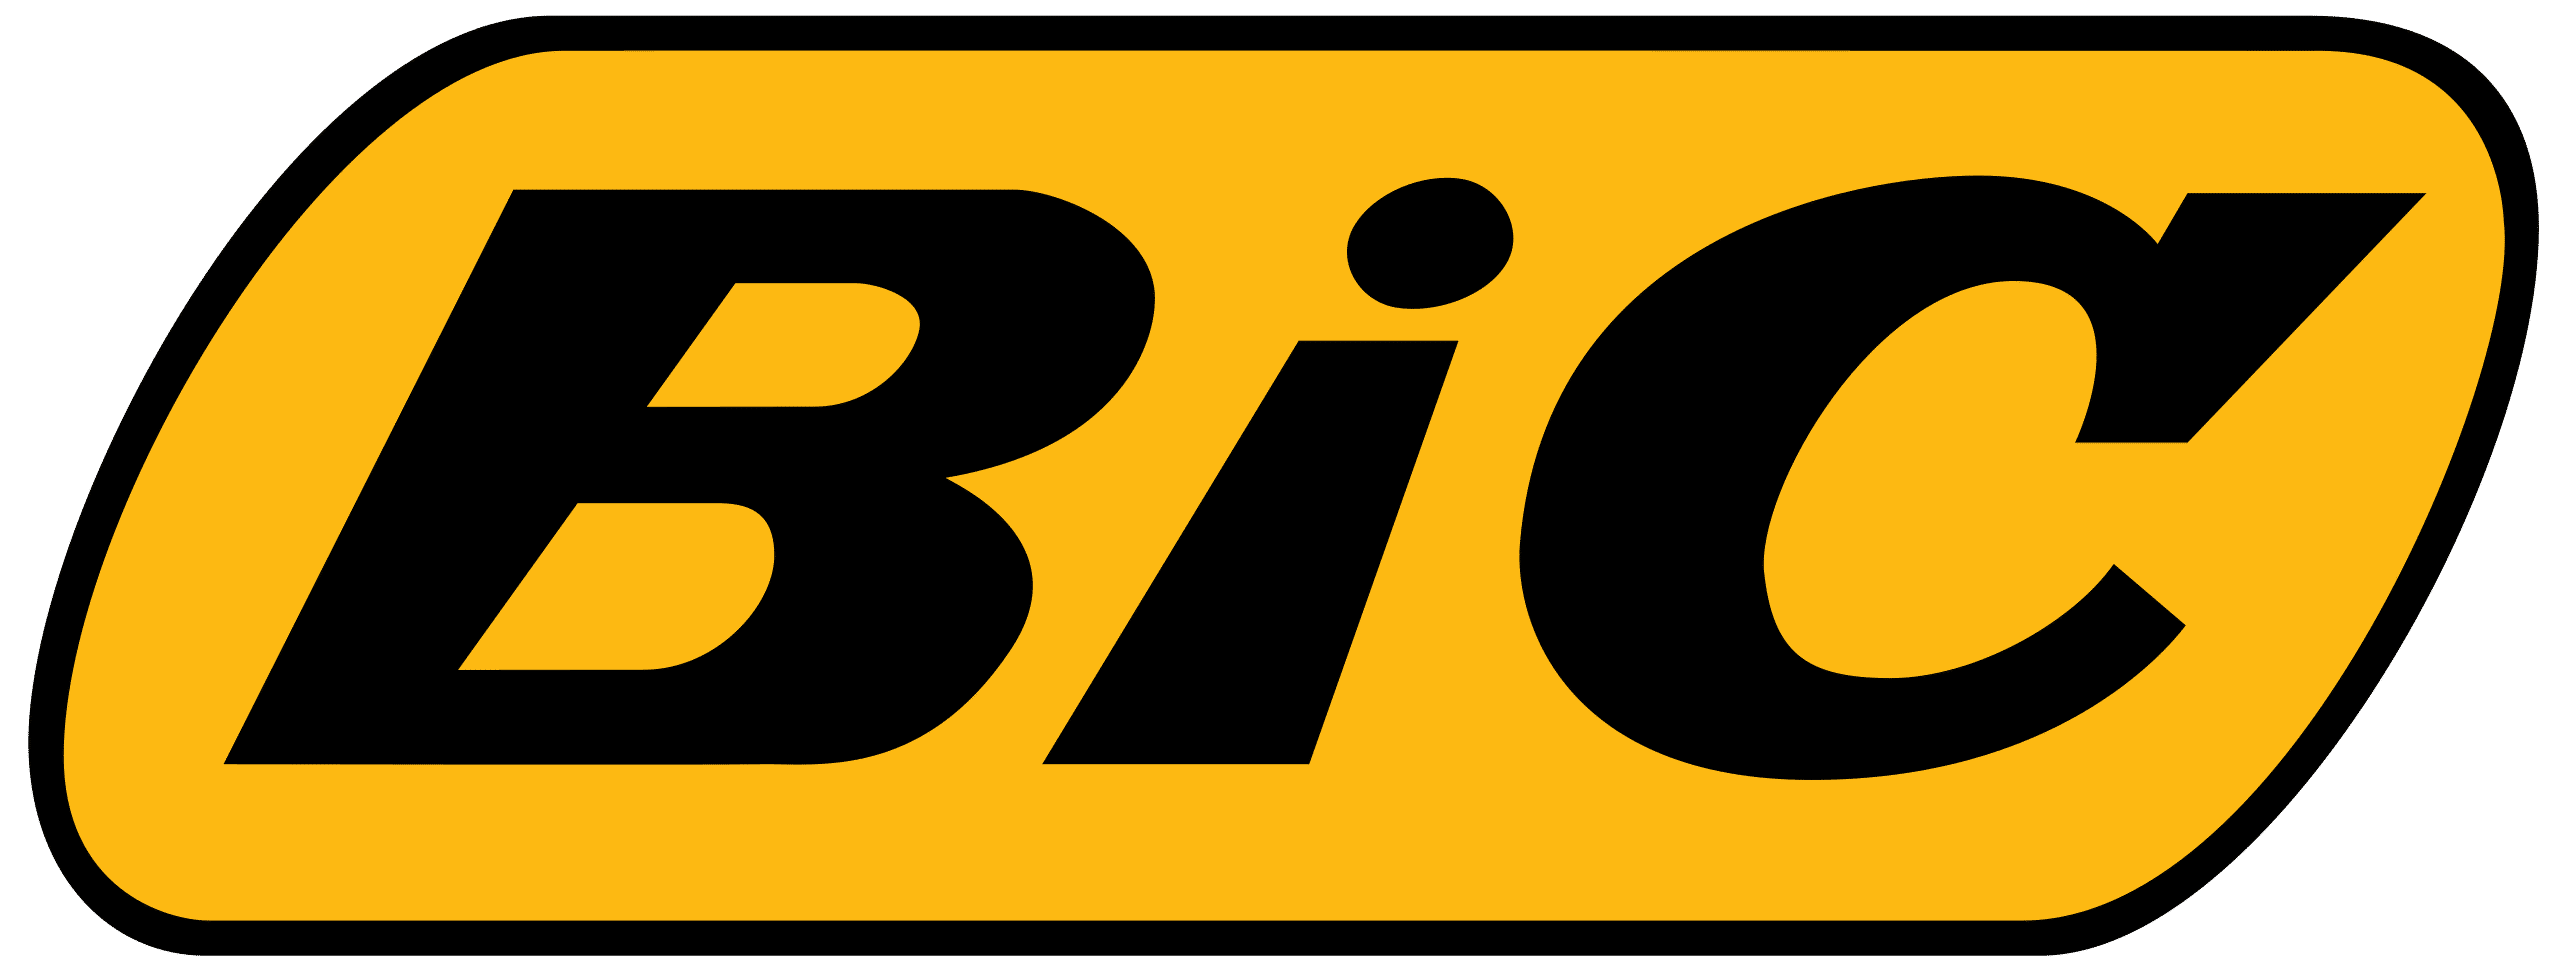 Bic logo.svg